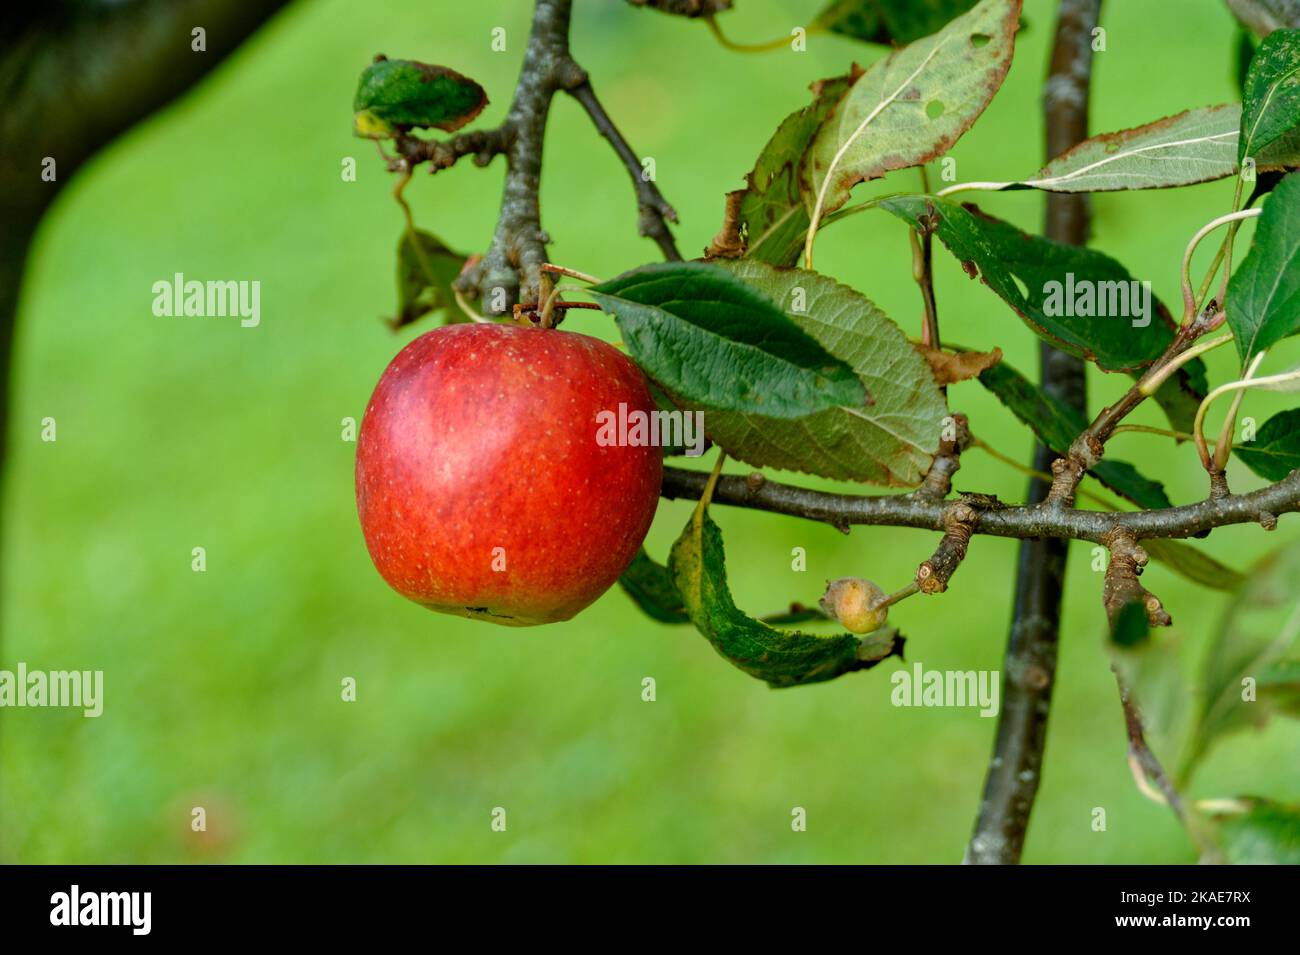 single apple growing on a tree Stock Photo